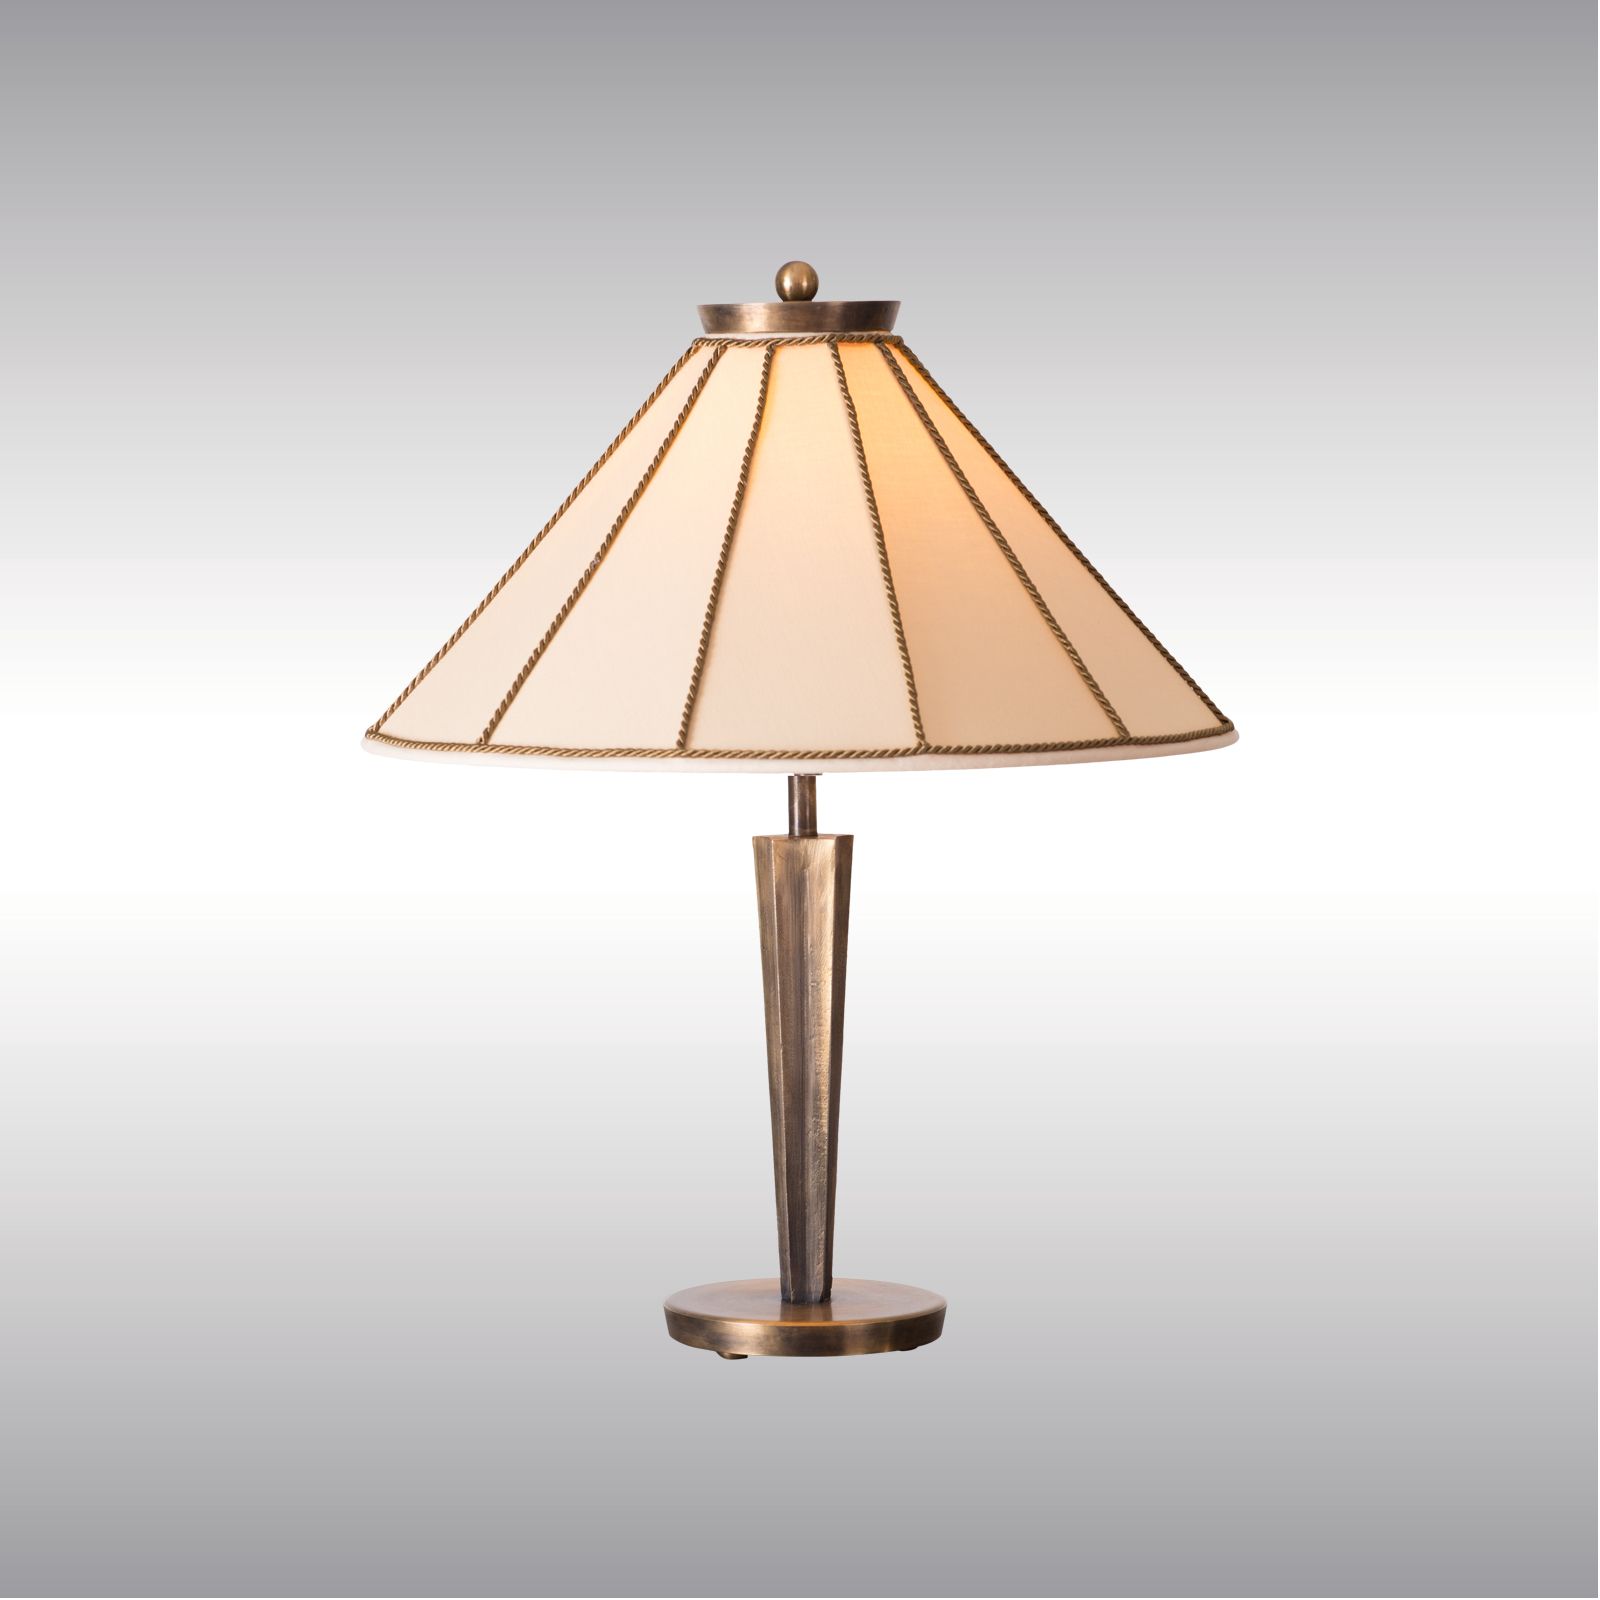 WOKA LAMPS VIENNA - OrderNr.: 22019|Josef Hoffmann Table Lamp - Design: Josef Hoffmann